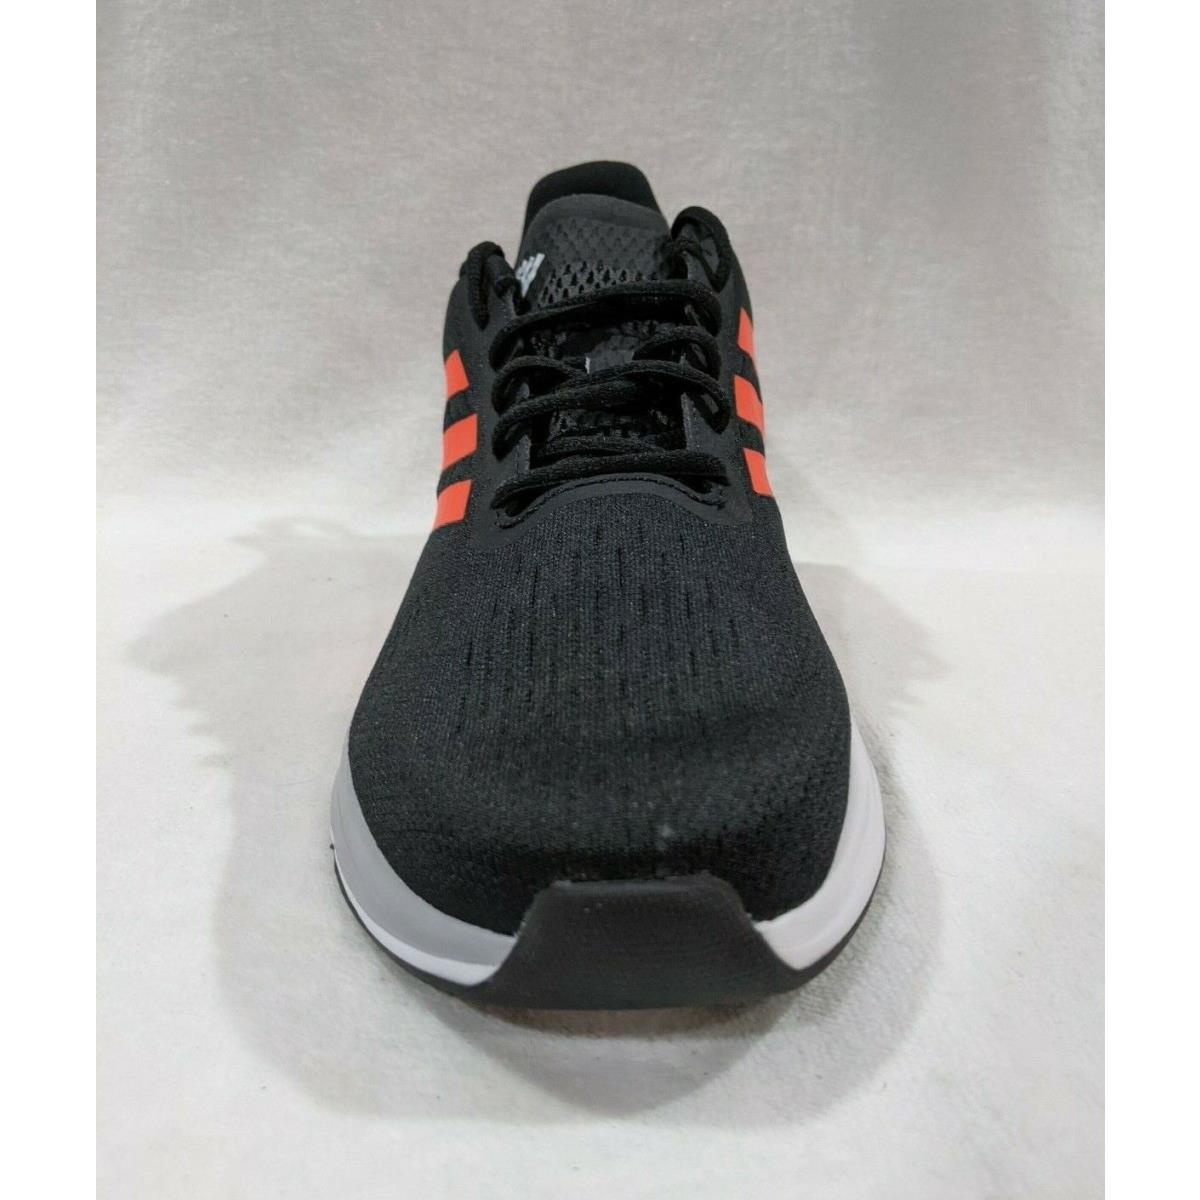 Adidas shoes Response Super Boost - Black , Orange 3